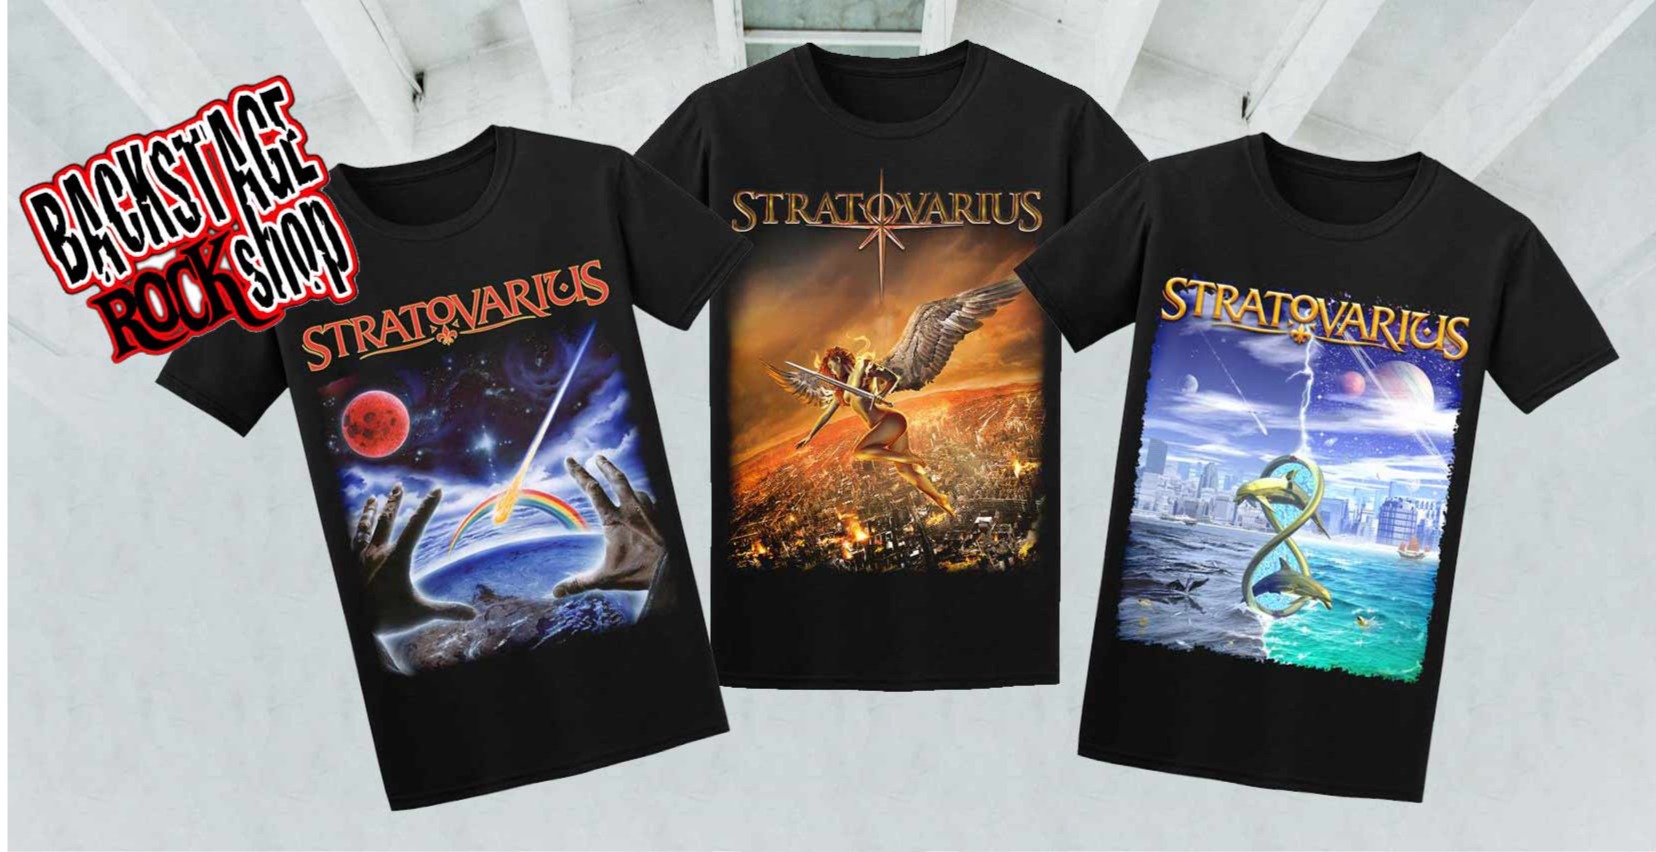 Stratovarius – The Official Stratovarius Website